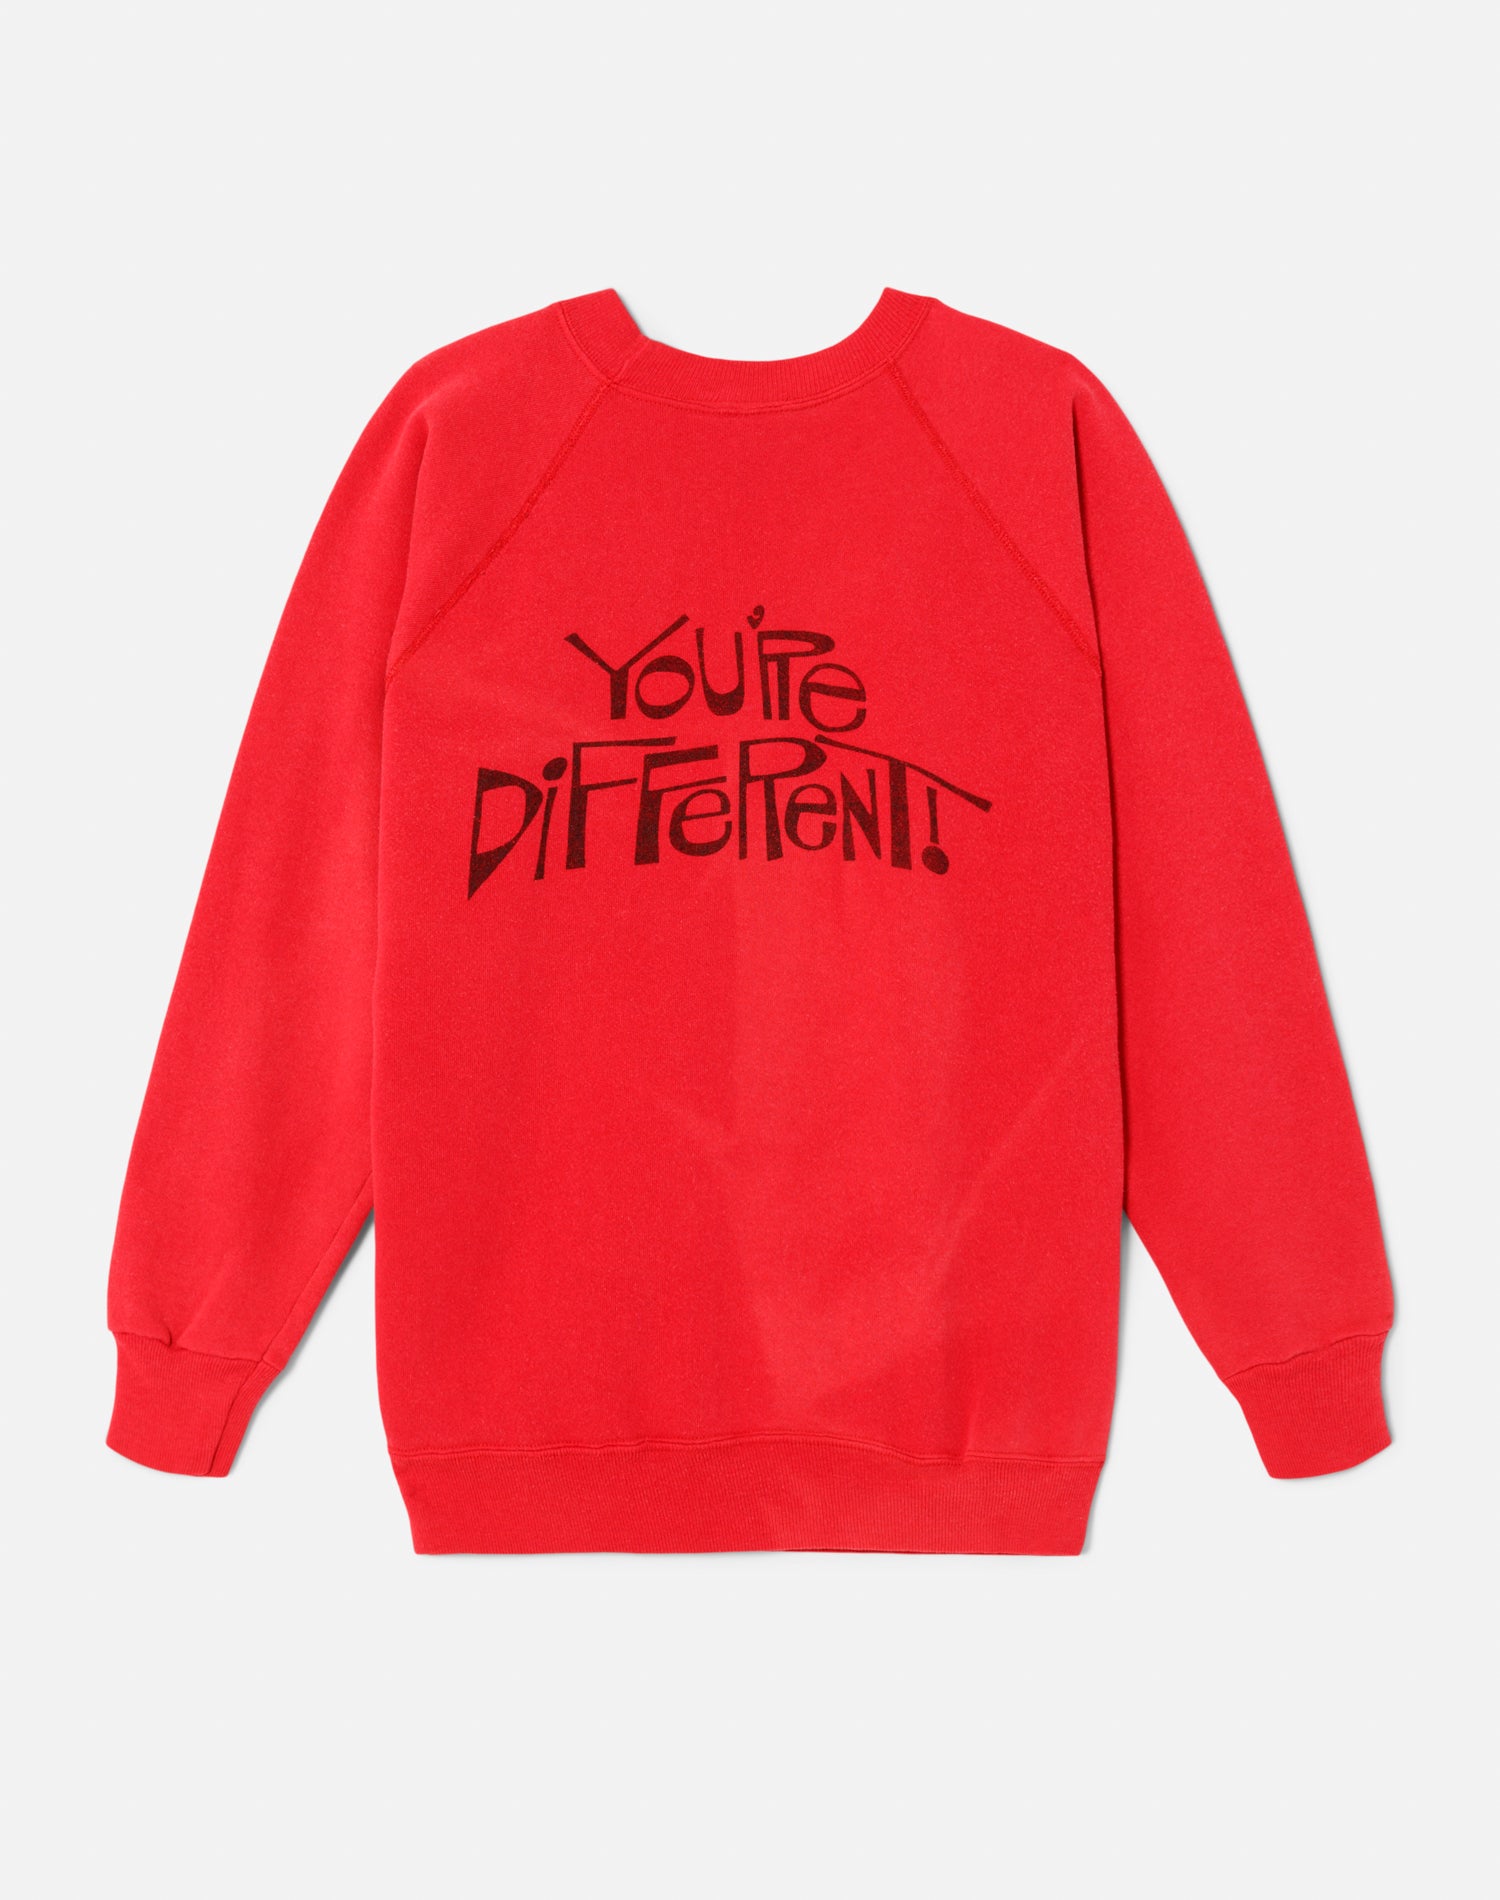 Upcycled "I Like You" Sweatshirt - Red